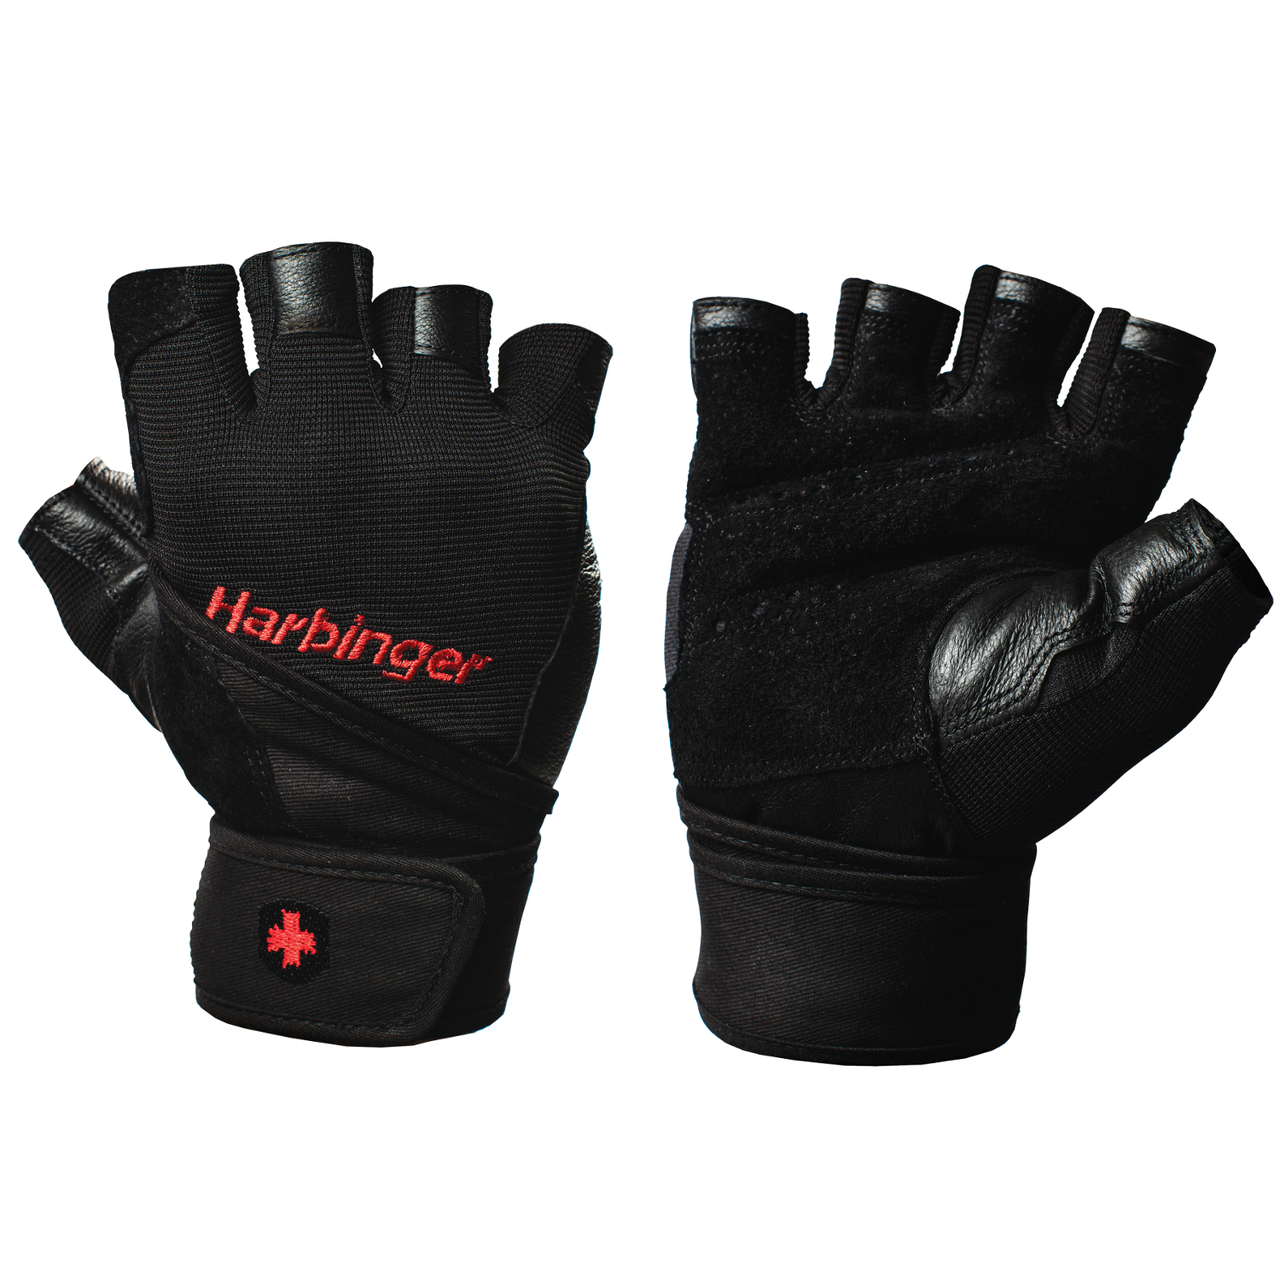 Harbinger Pro Wristwrap, Black